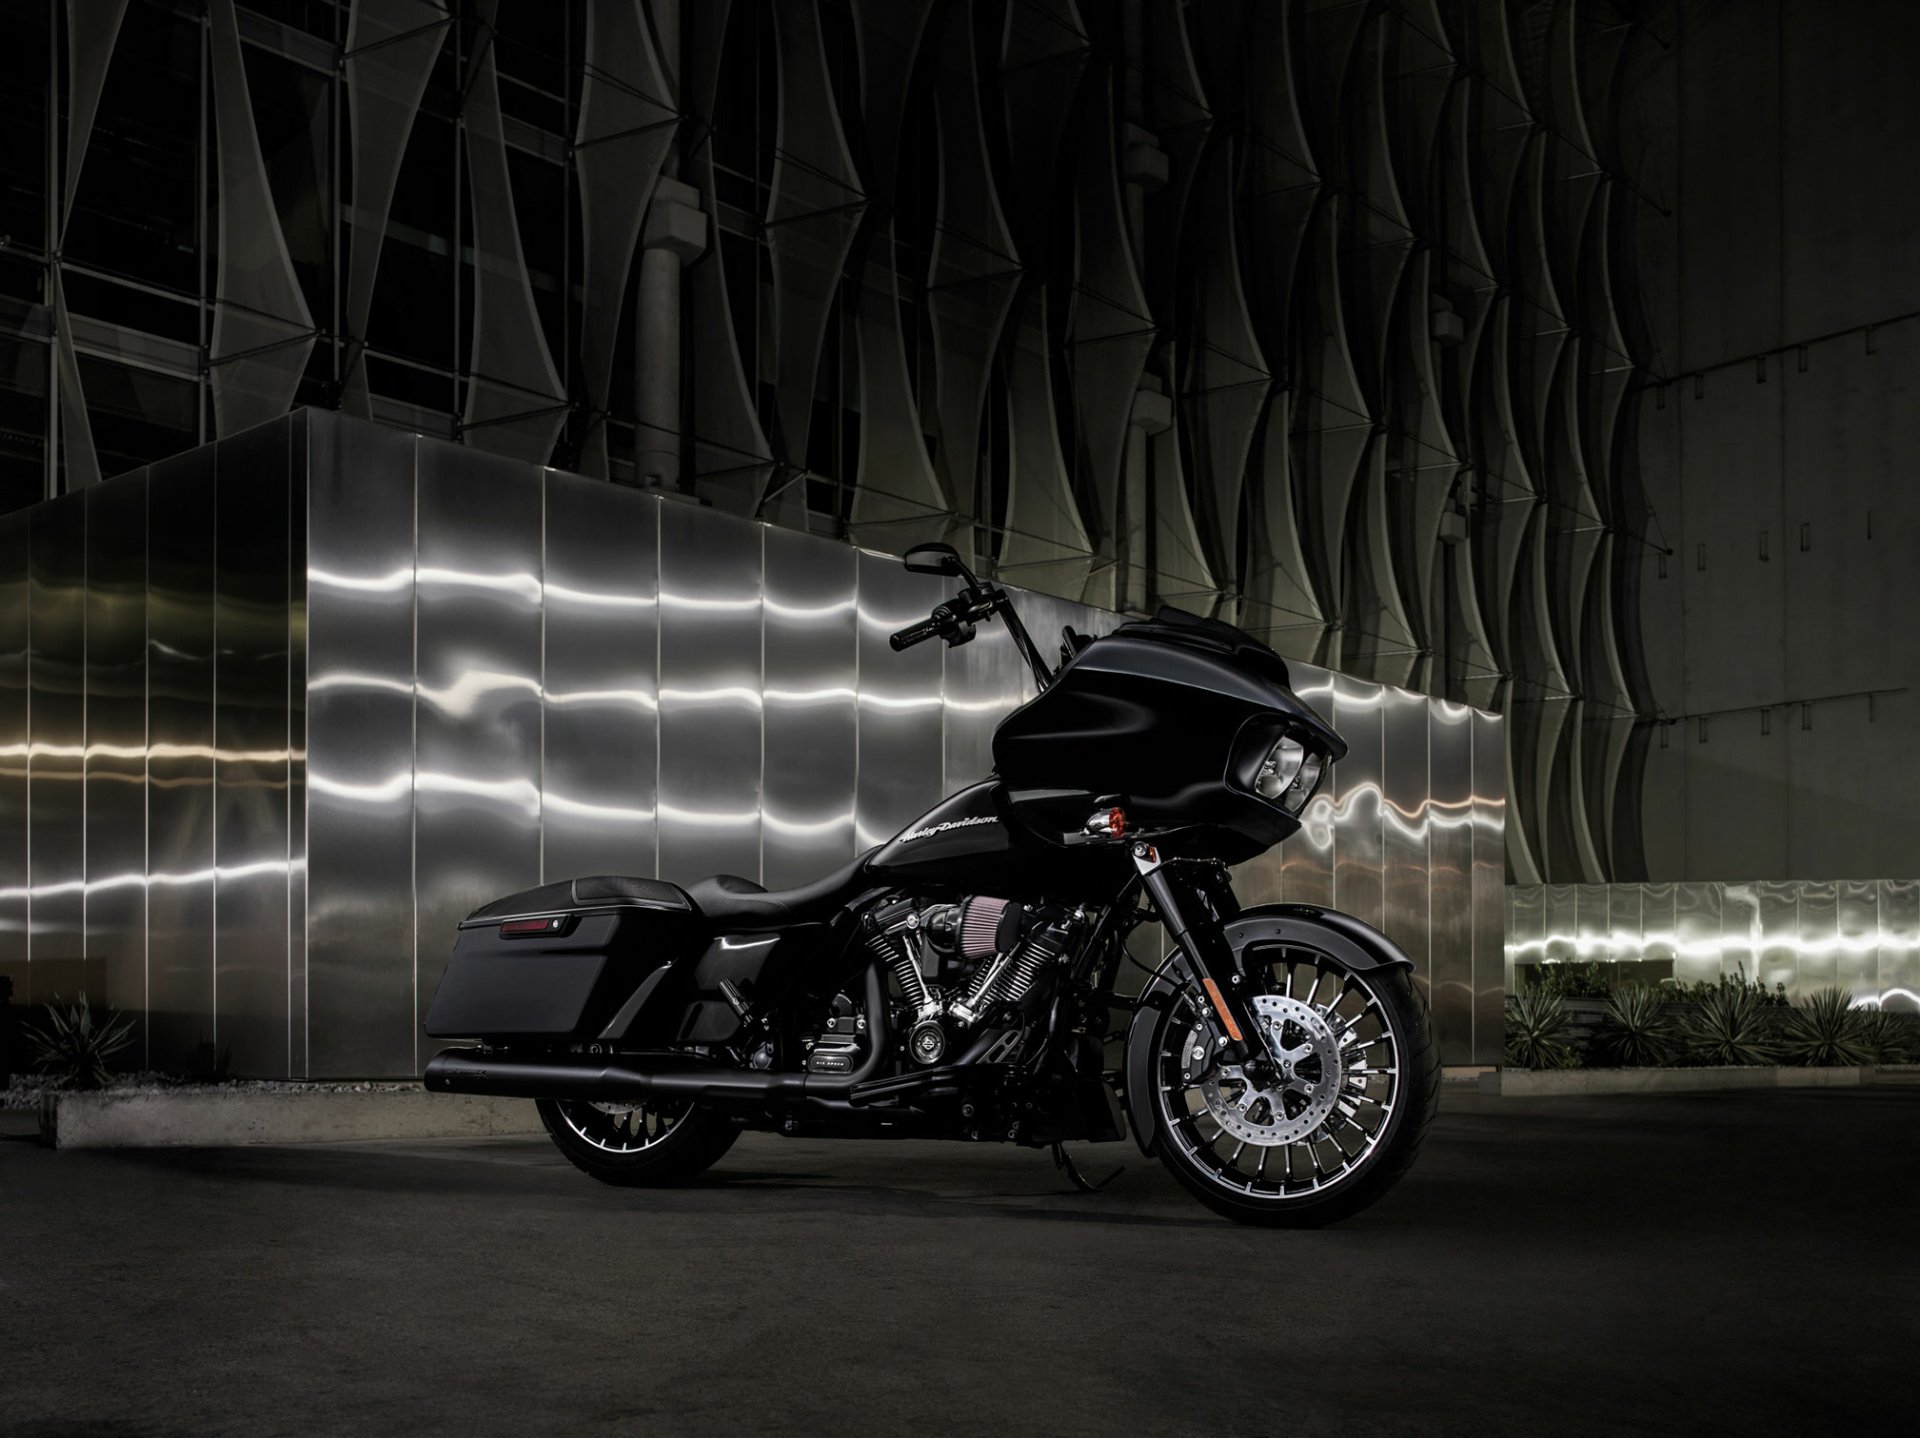 2019 Harley  Davidson  Road Glide Special HD Wallpaper  